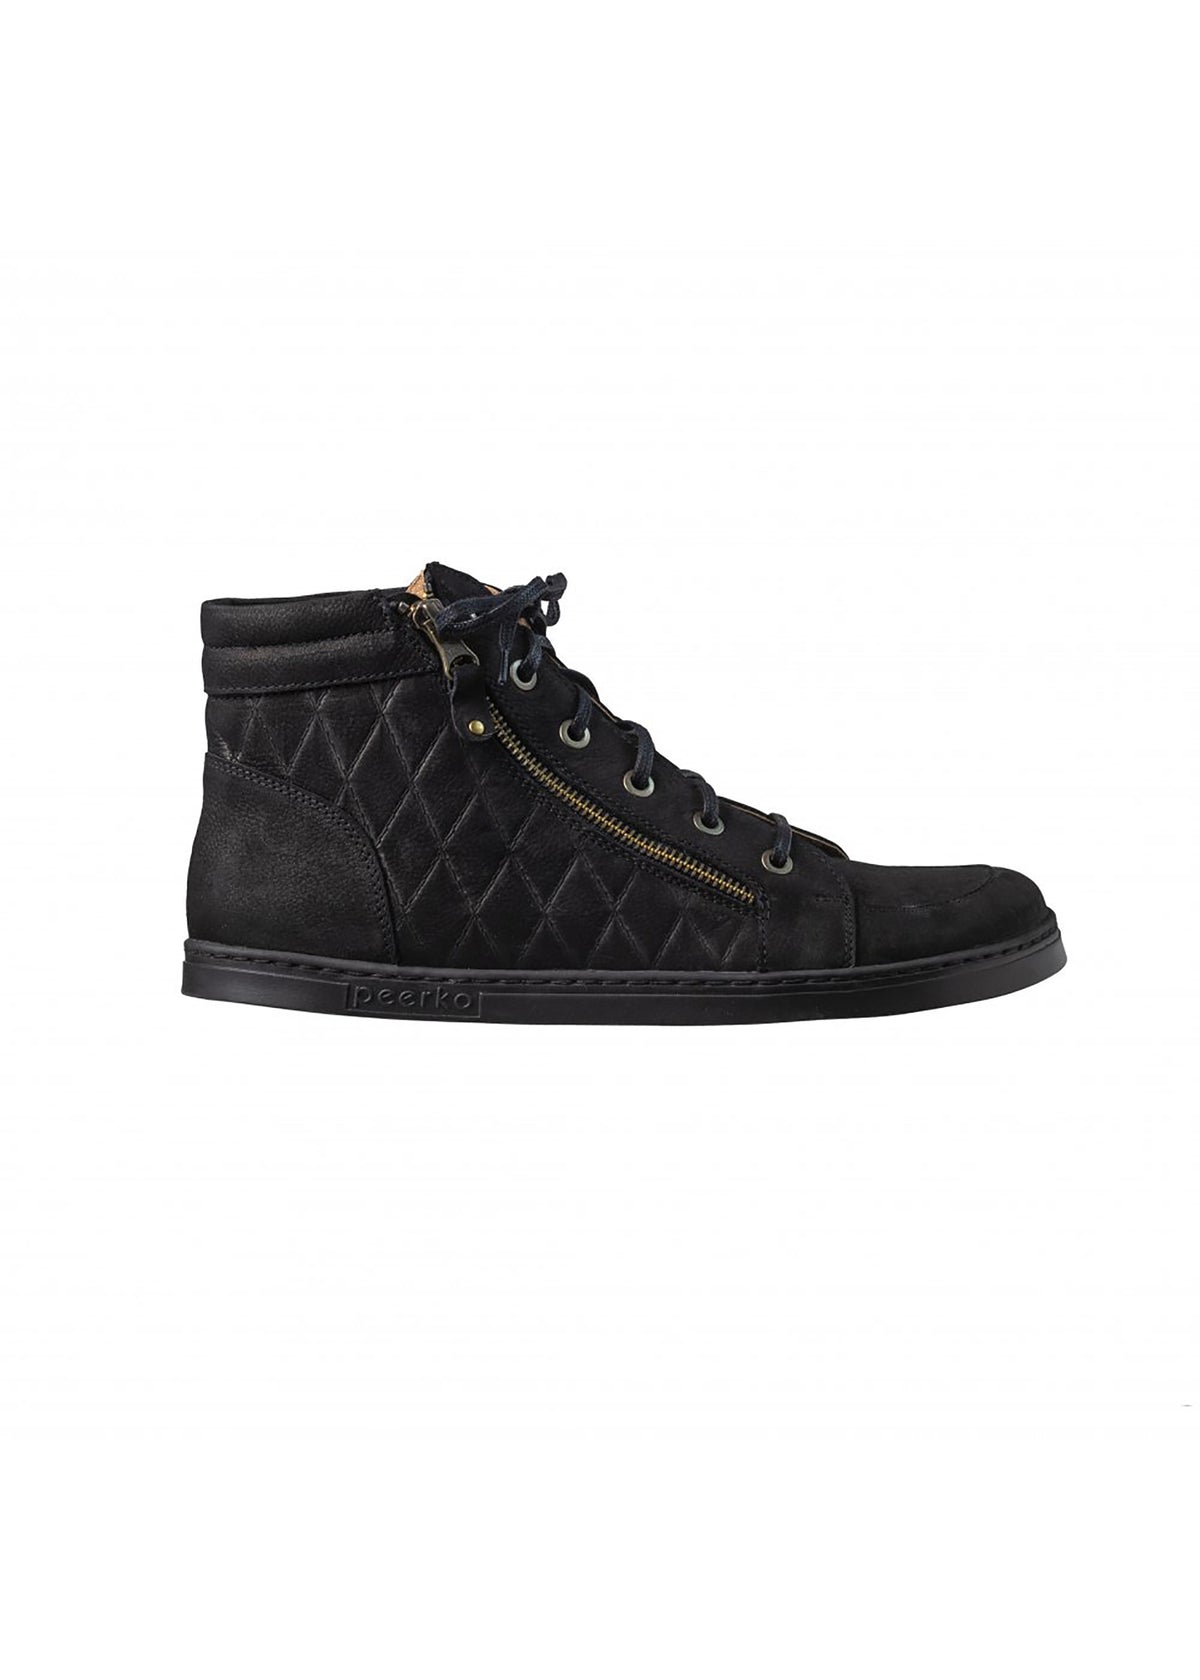 Barefoot shoes, High top sneakers - Rex Coal, black